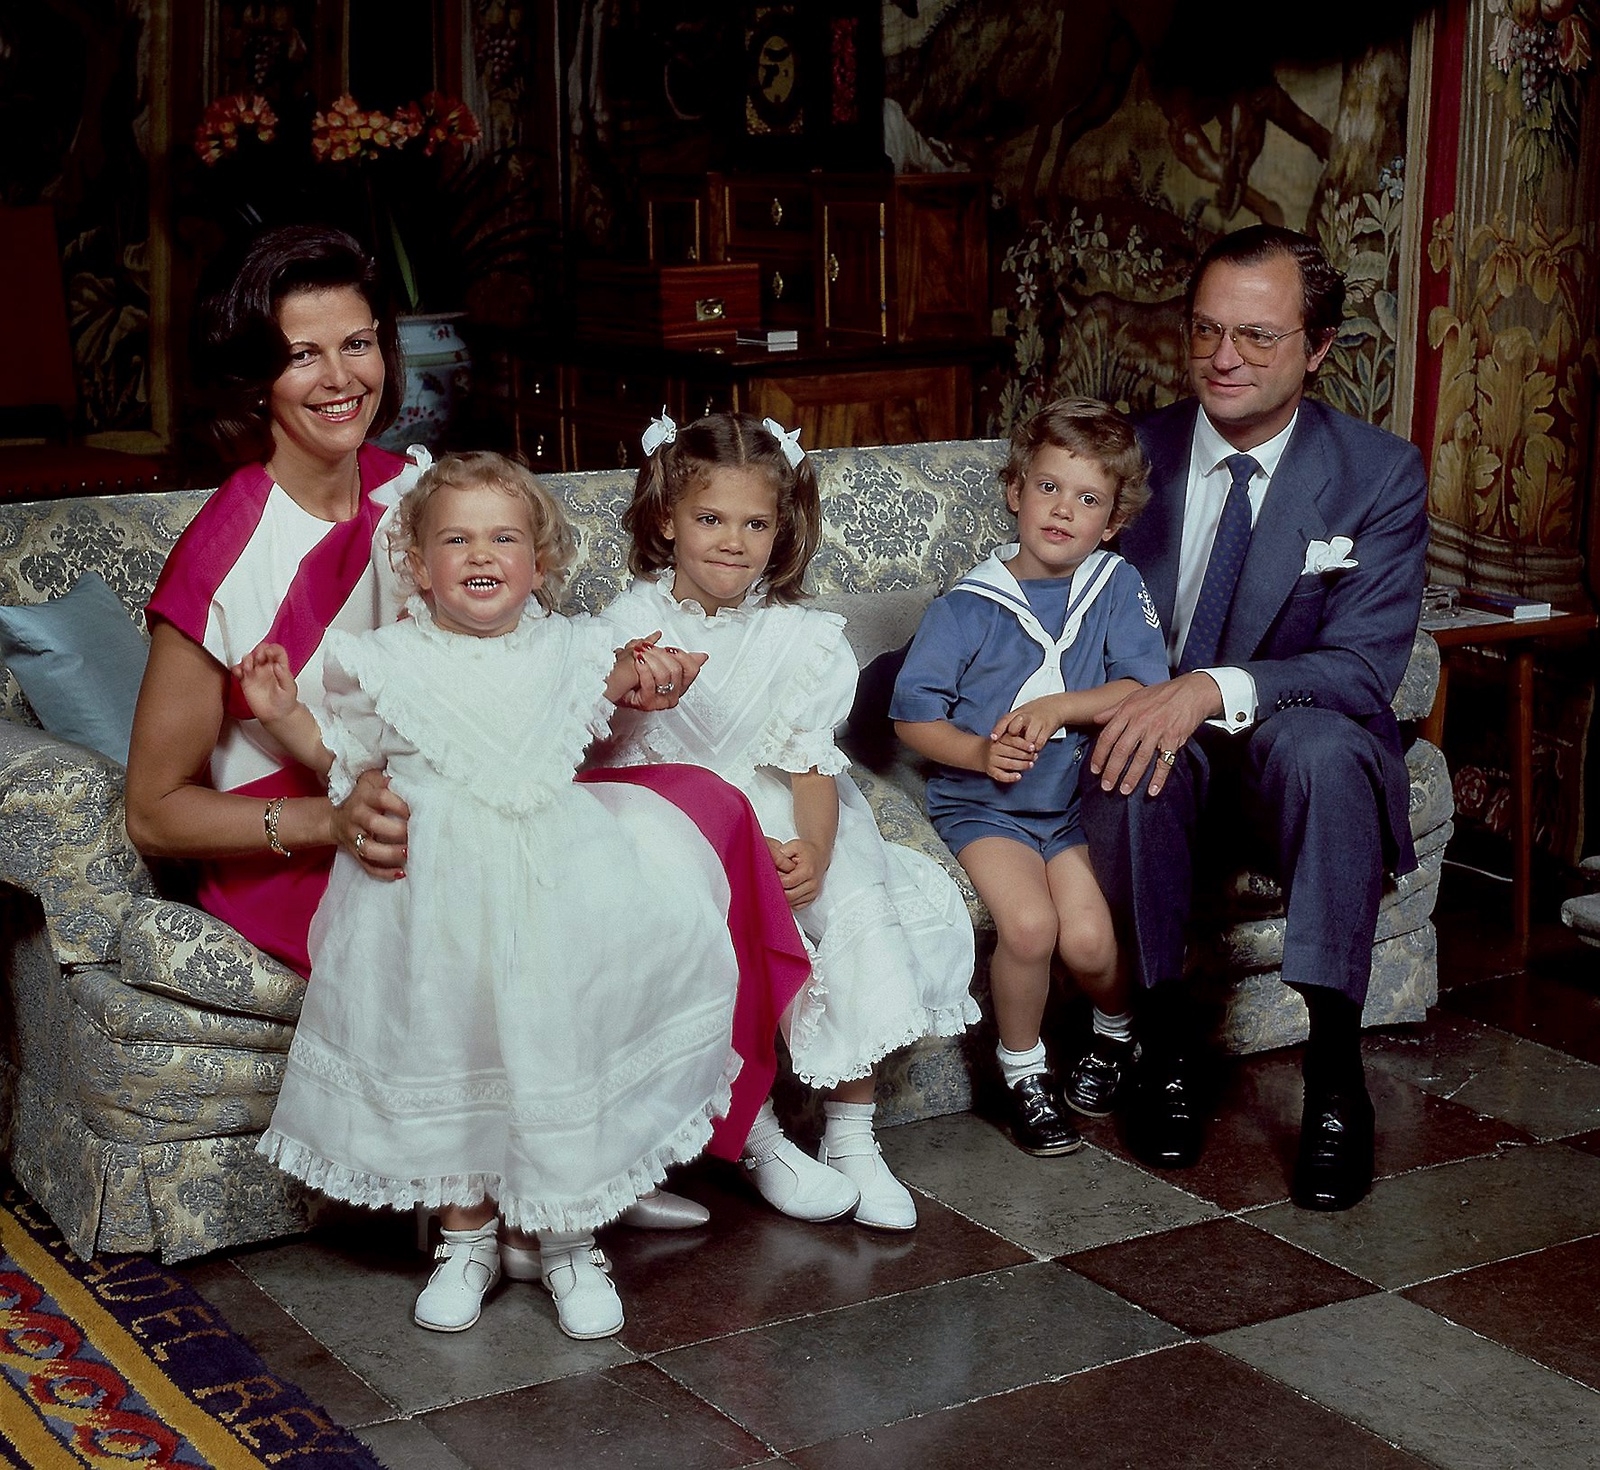 Kungafamiljen på Drottningholms slott 1984.
Foto: Håkan Lind kungahuset.se